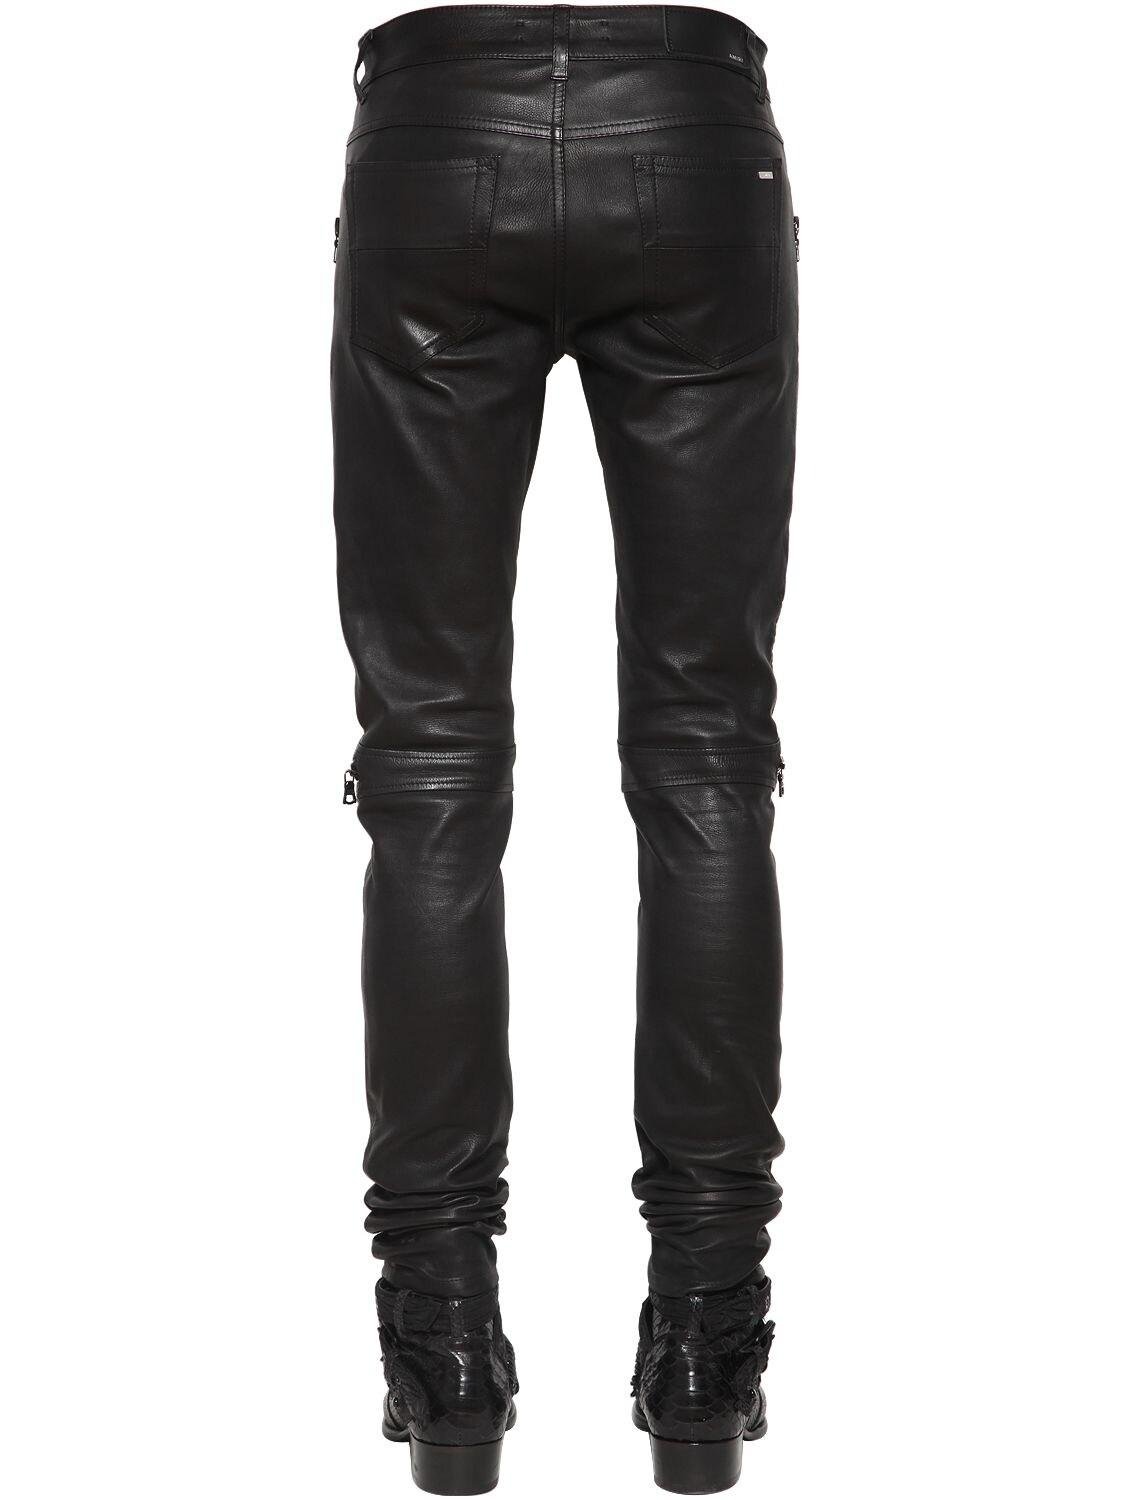 https://cdna.lystit.com/photos/lvr/824da2d5/amiri-Black-15cm-Mx2-Leather-Jeans.jpeg